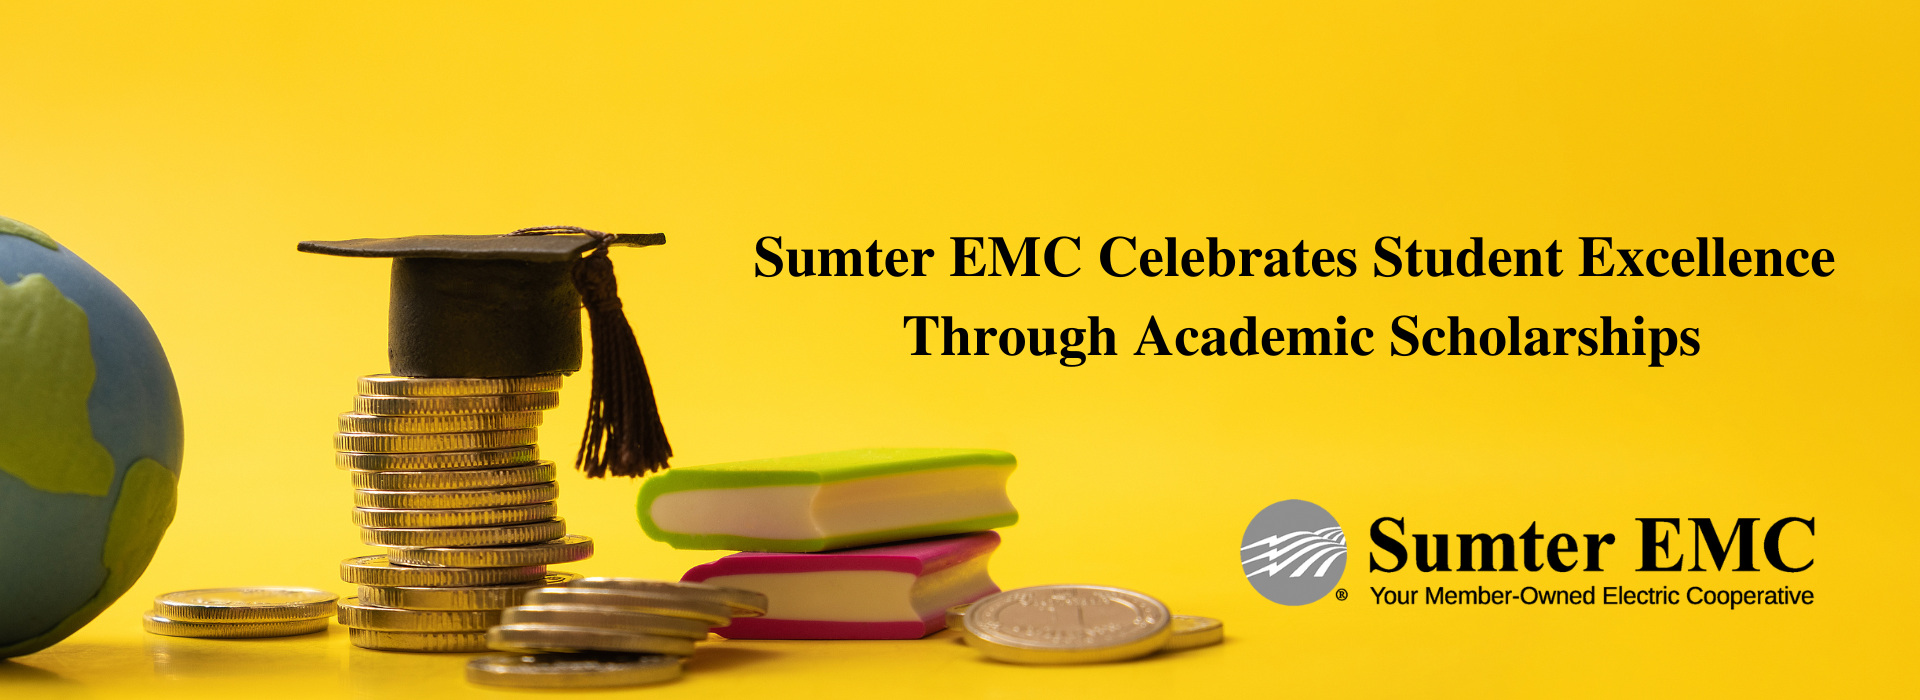 Sumter EMC Celebrates Student Excellence Through Academic Scholarships 